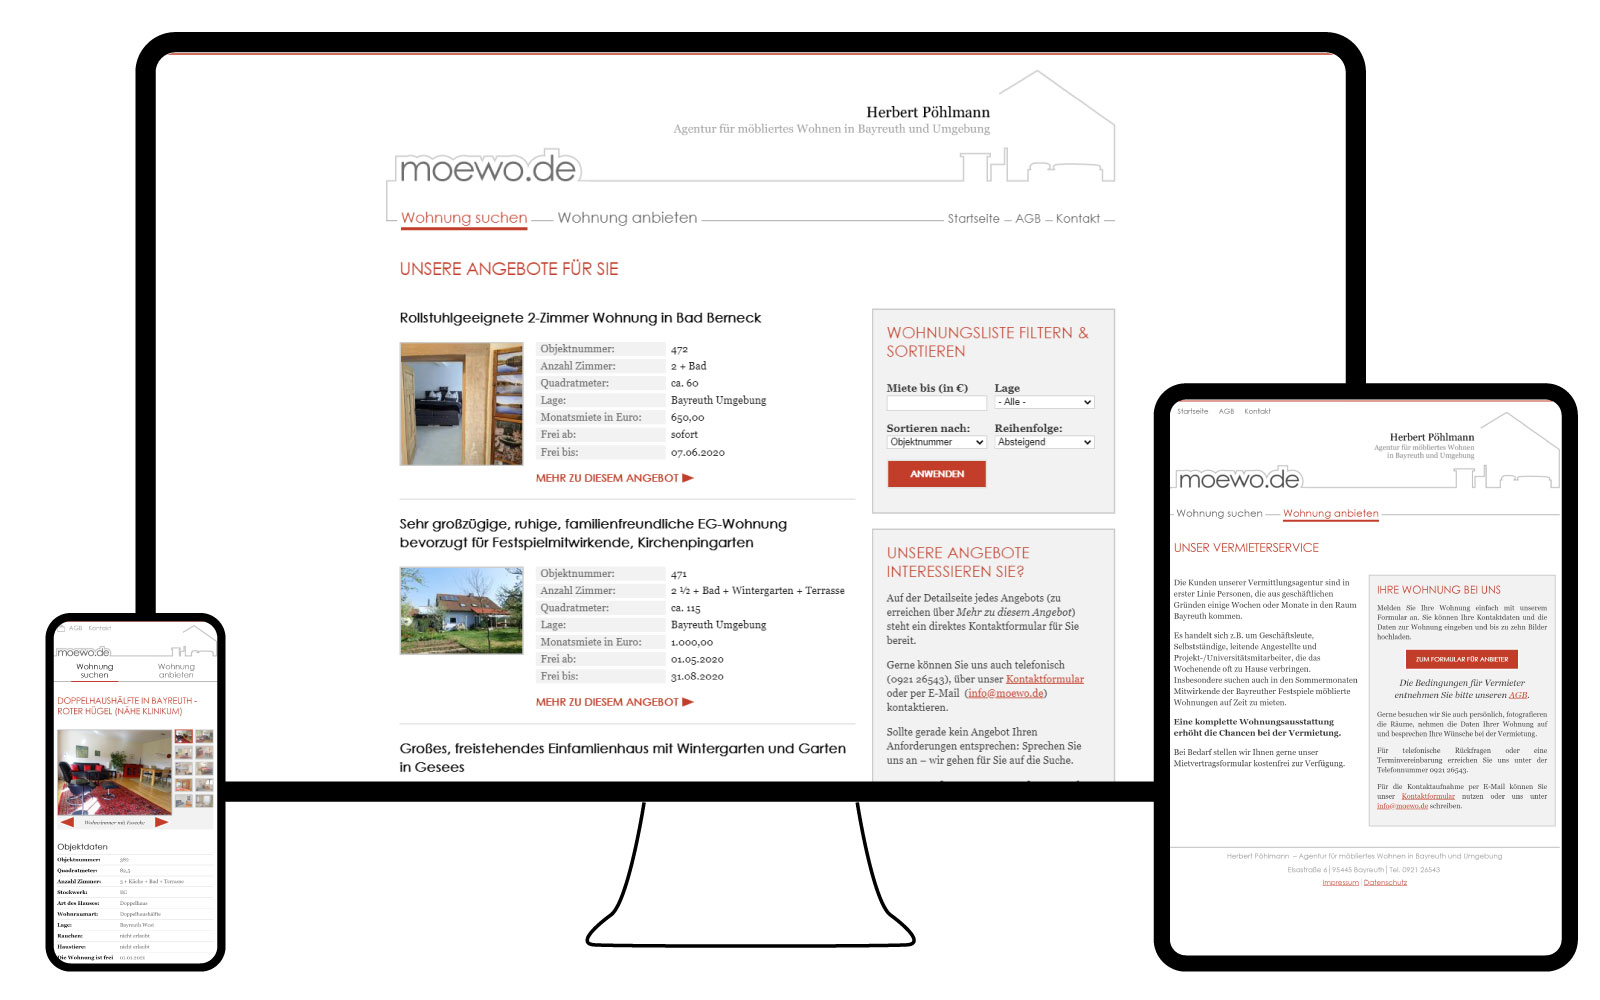 Screenshot: Respnsive web site for moewo.de